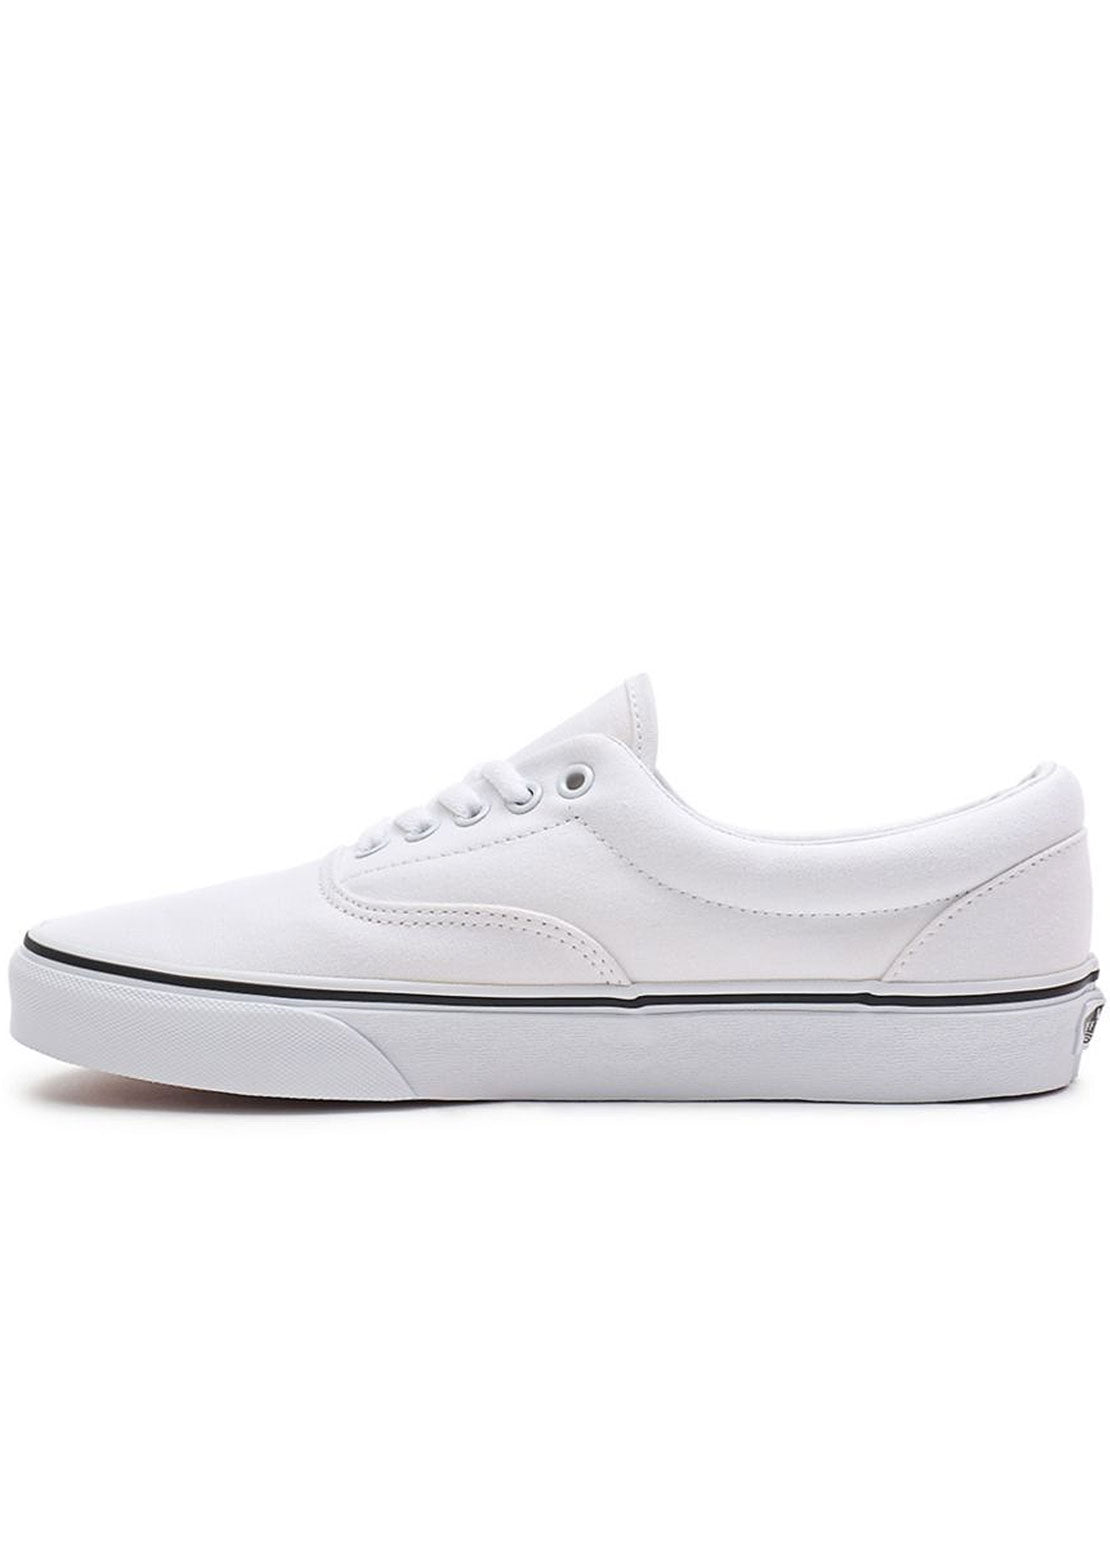 Vans Unisex Era Shoes White